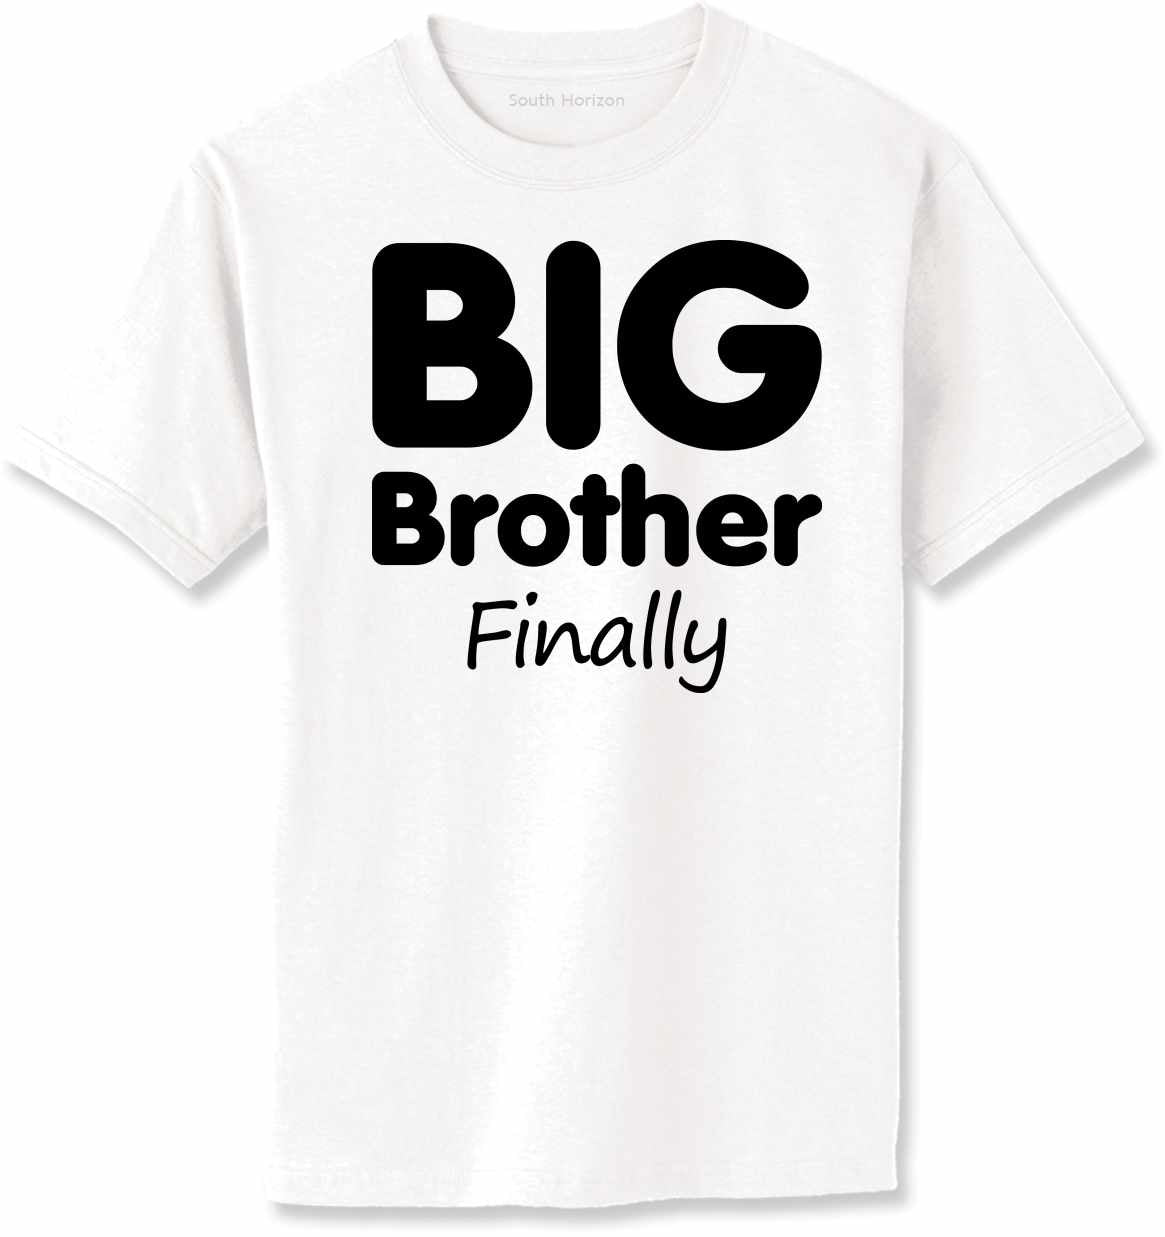 Big Brother Finally Adult T-Shirt (#962-1)